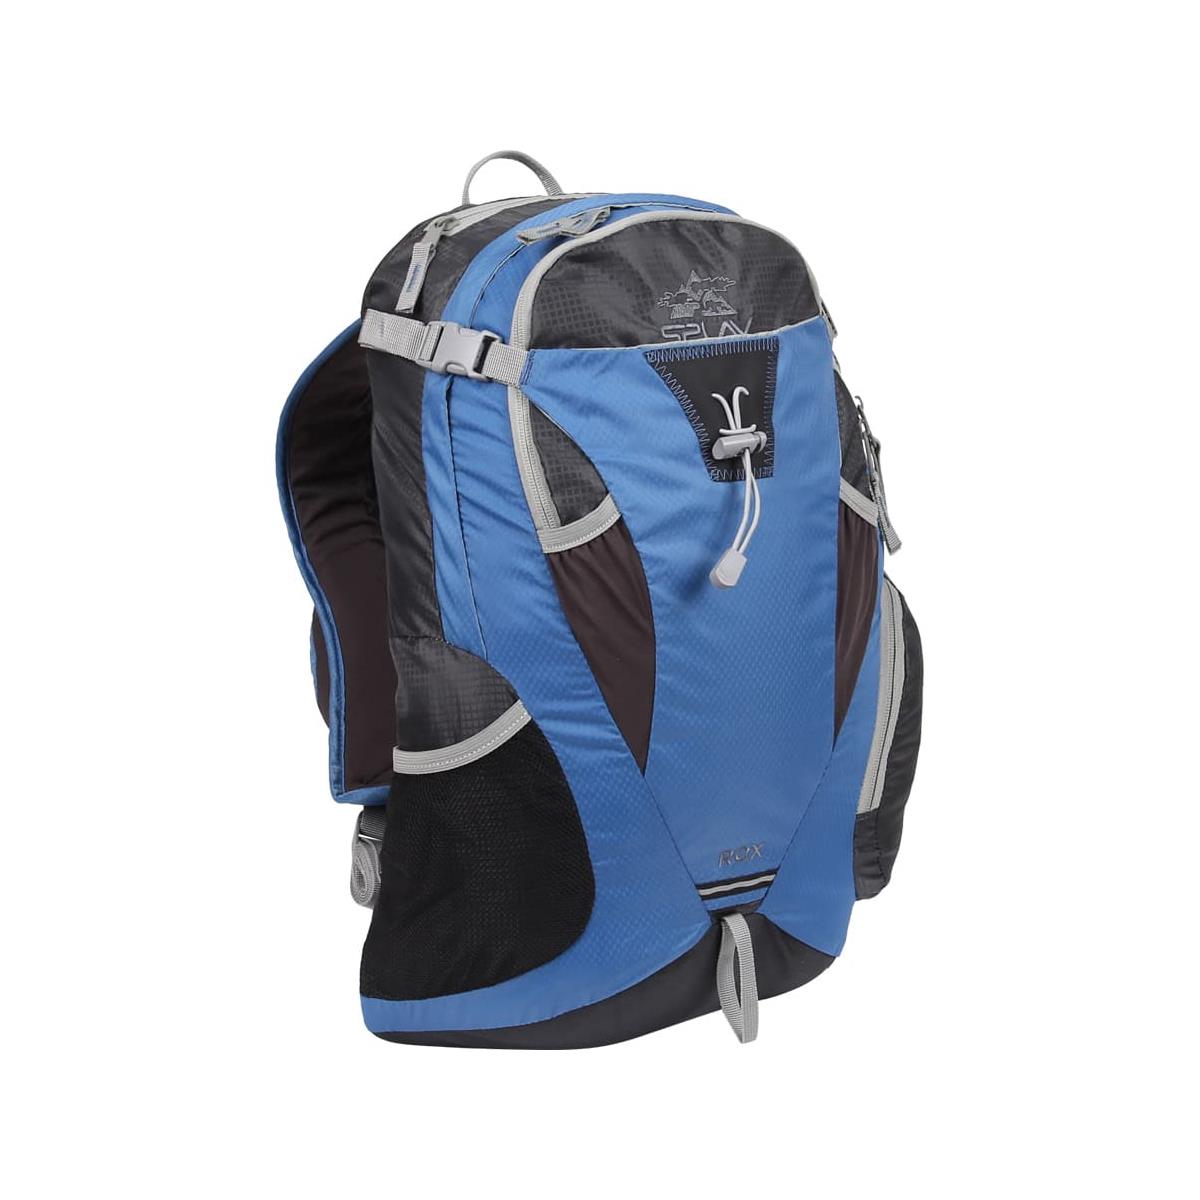 Рюкзак Rox синий СПЛАВ сумка рюкзак